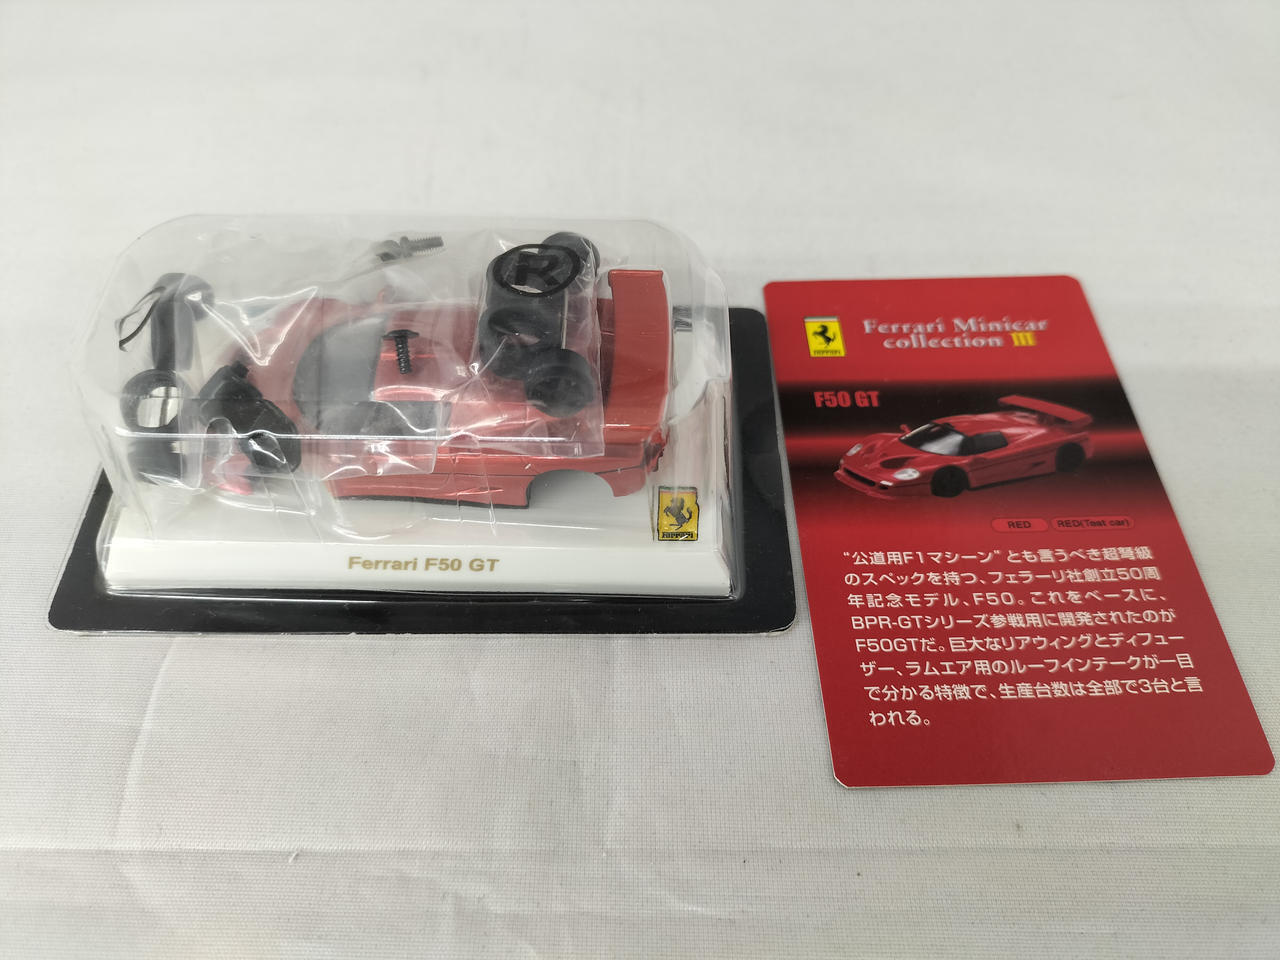 Kyosho Ferrari Minicar Collection3 F50 Gt